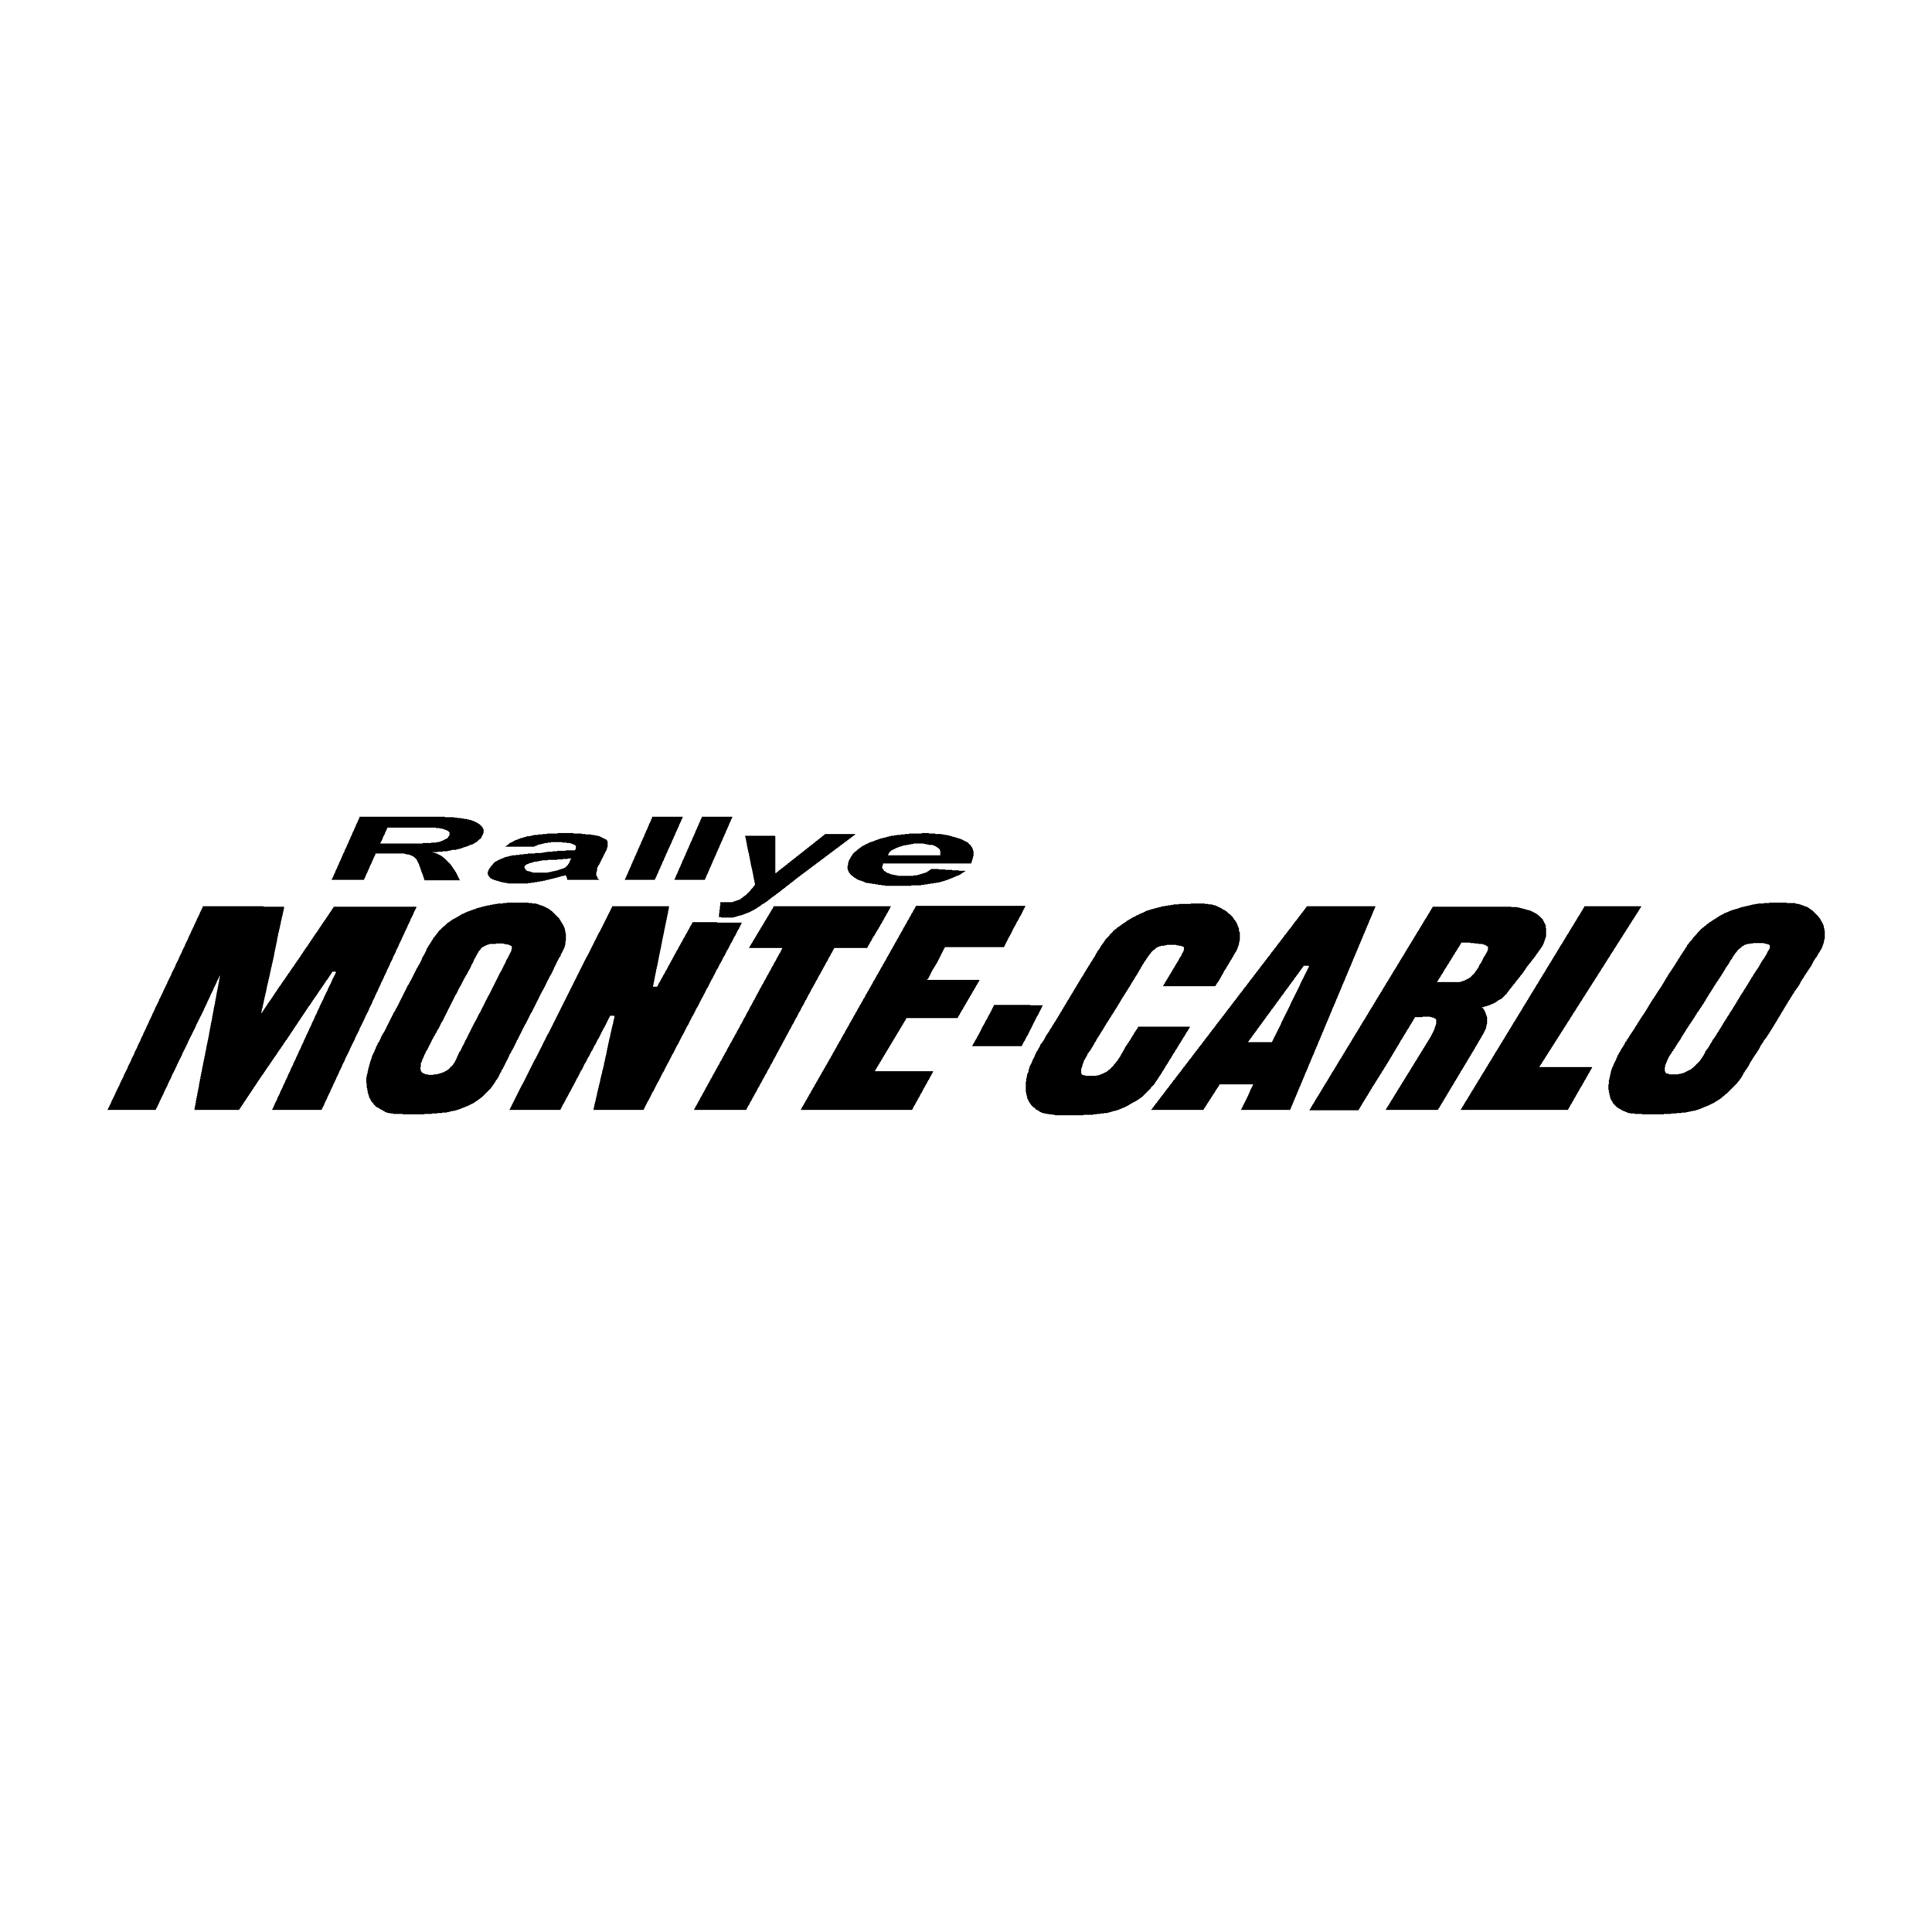 stickers rally monte carlo ref 1 tuning audio sonorisation car auto moto camion competition deco rallye autocollant